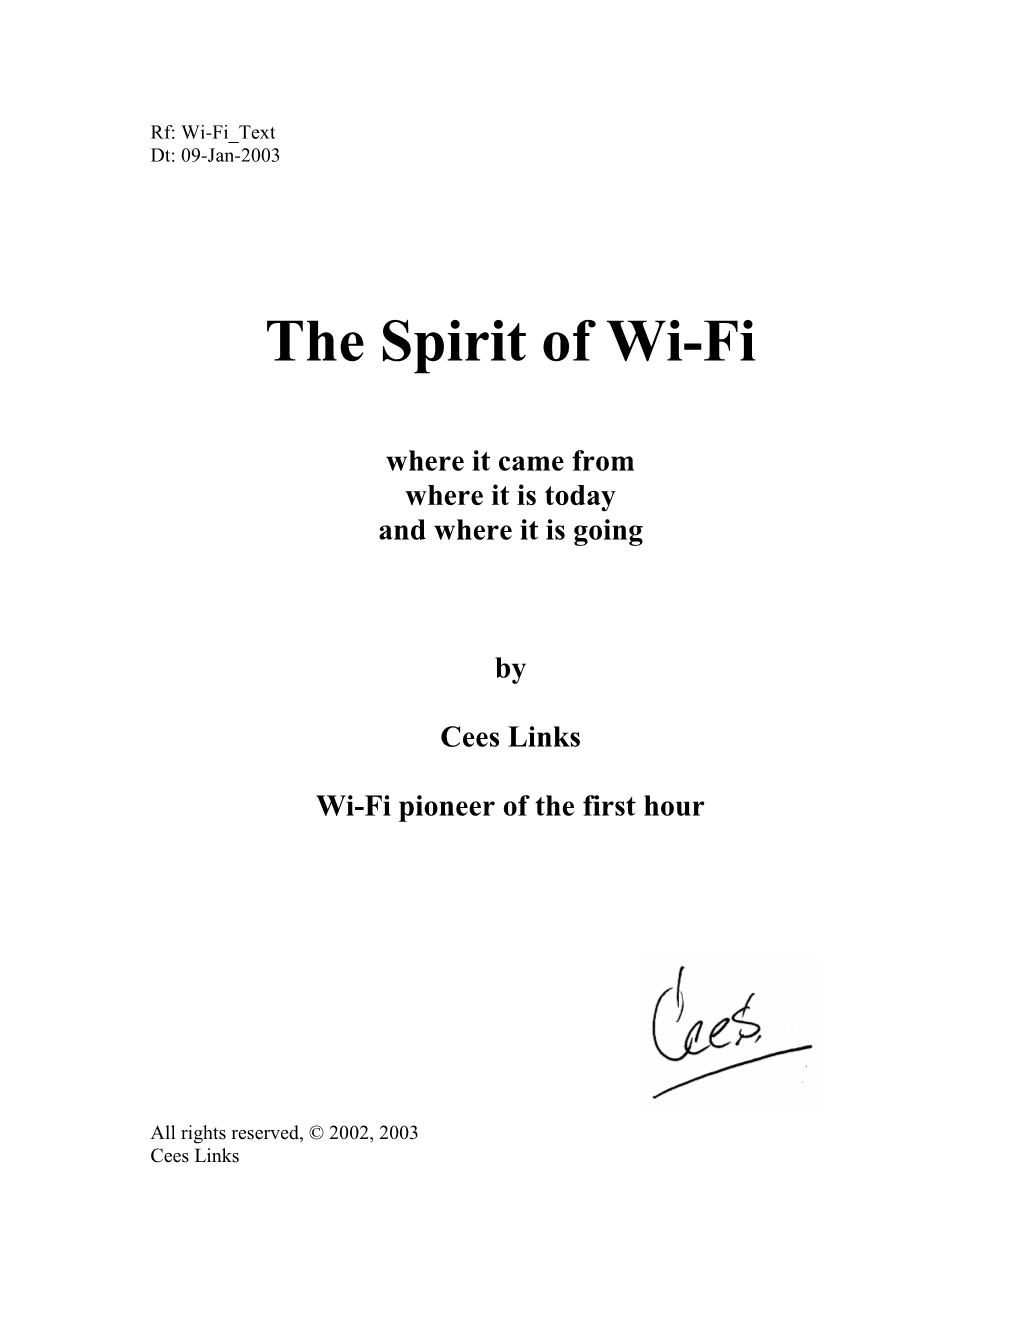 The Spirit of Wi-Fi